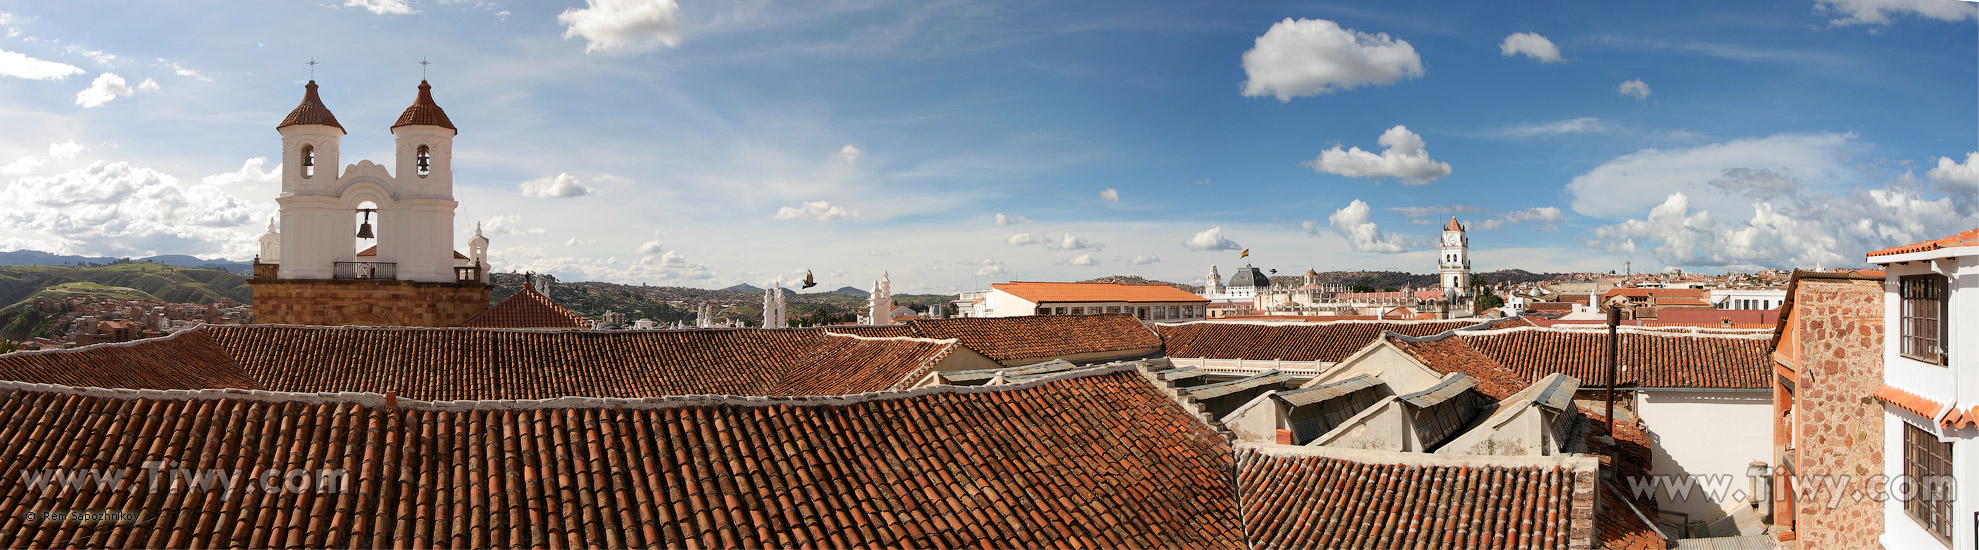 Romantic view form the roof of Hostal de su Merced